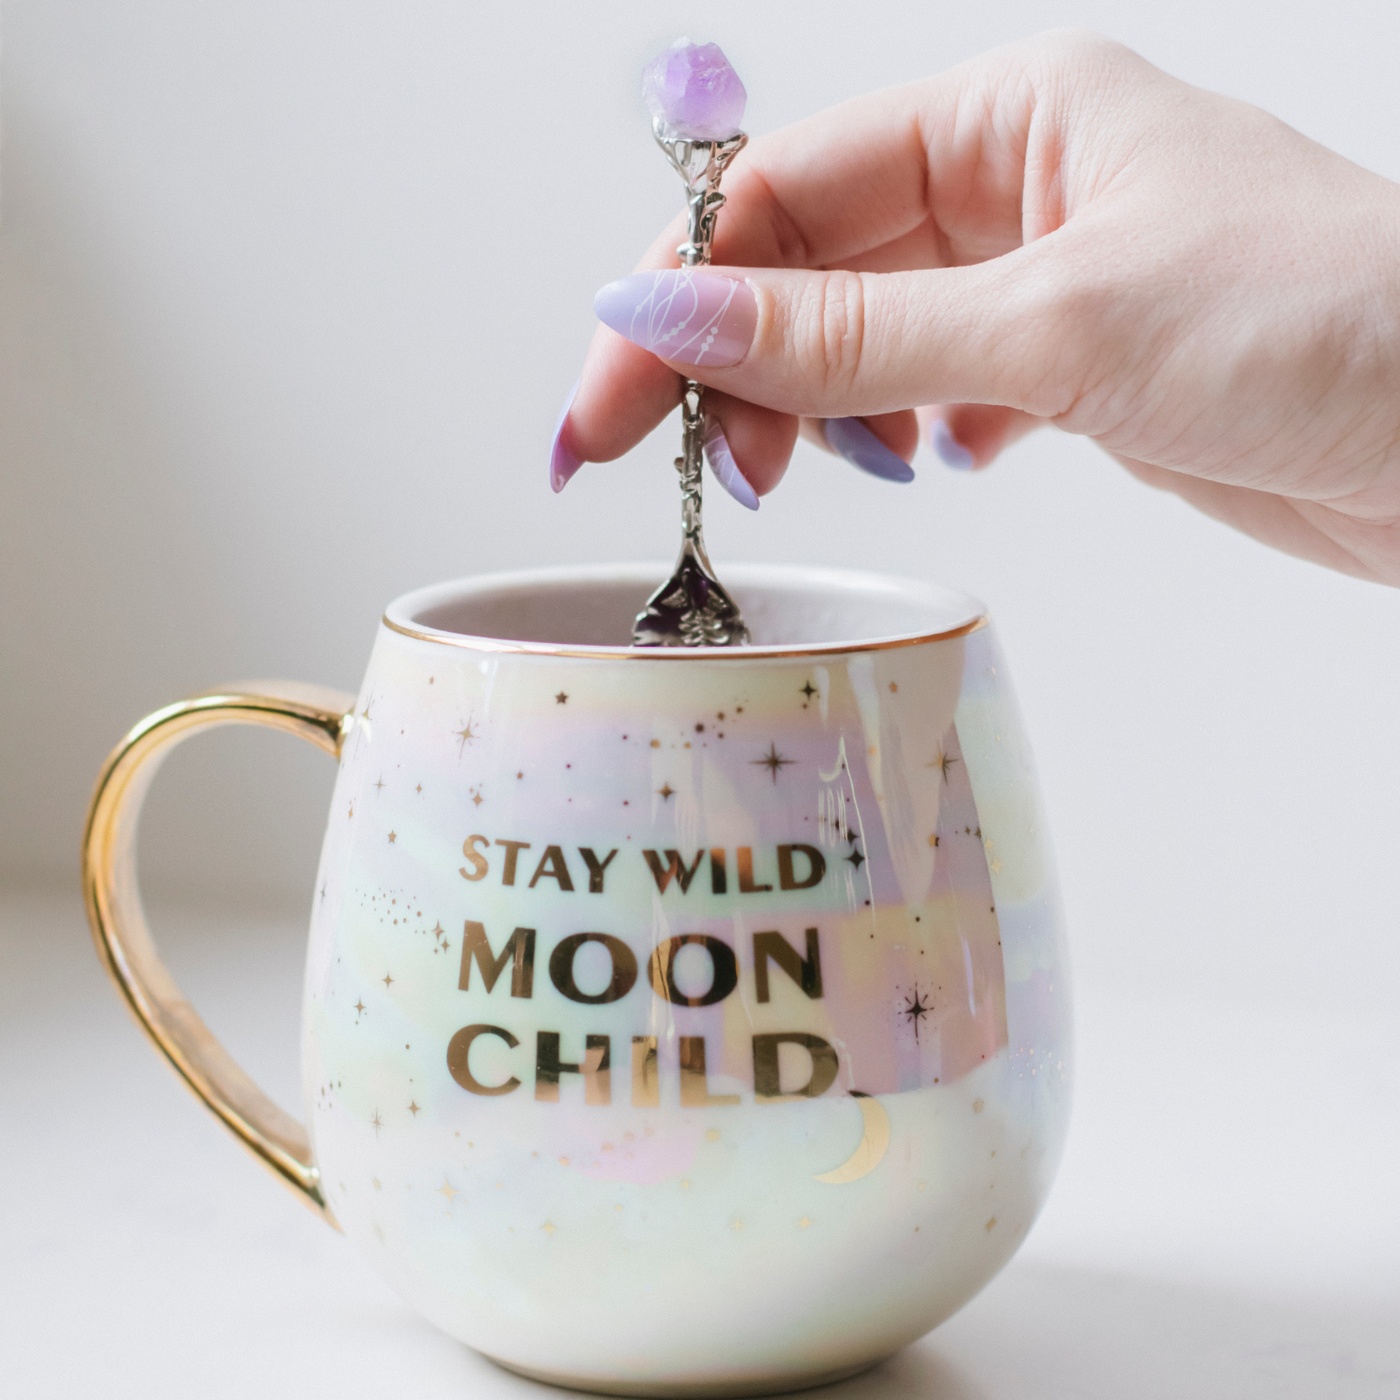 Stay Wild Moon Child - Celestial Mug Set + Amethyst Tea Accessories